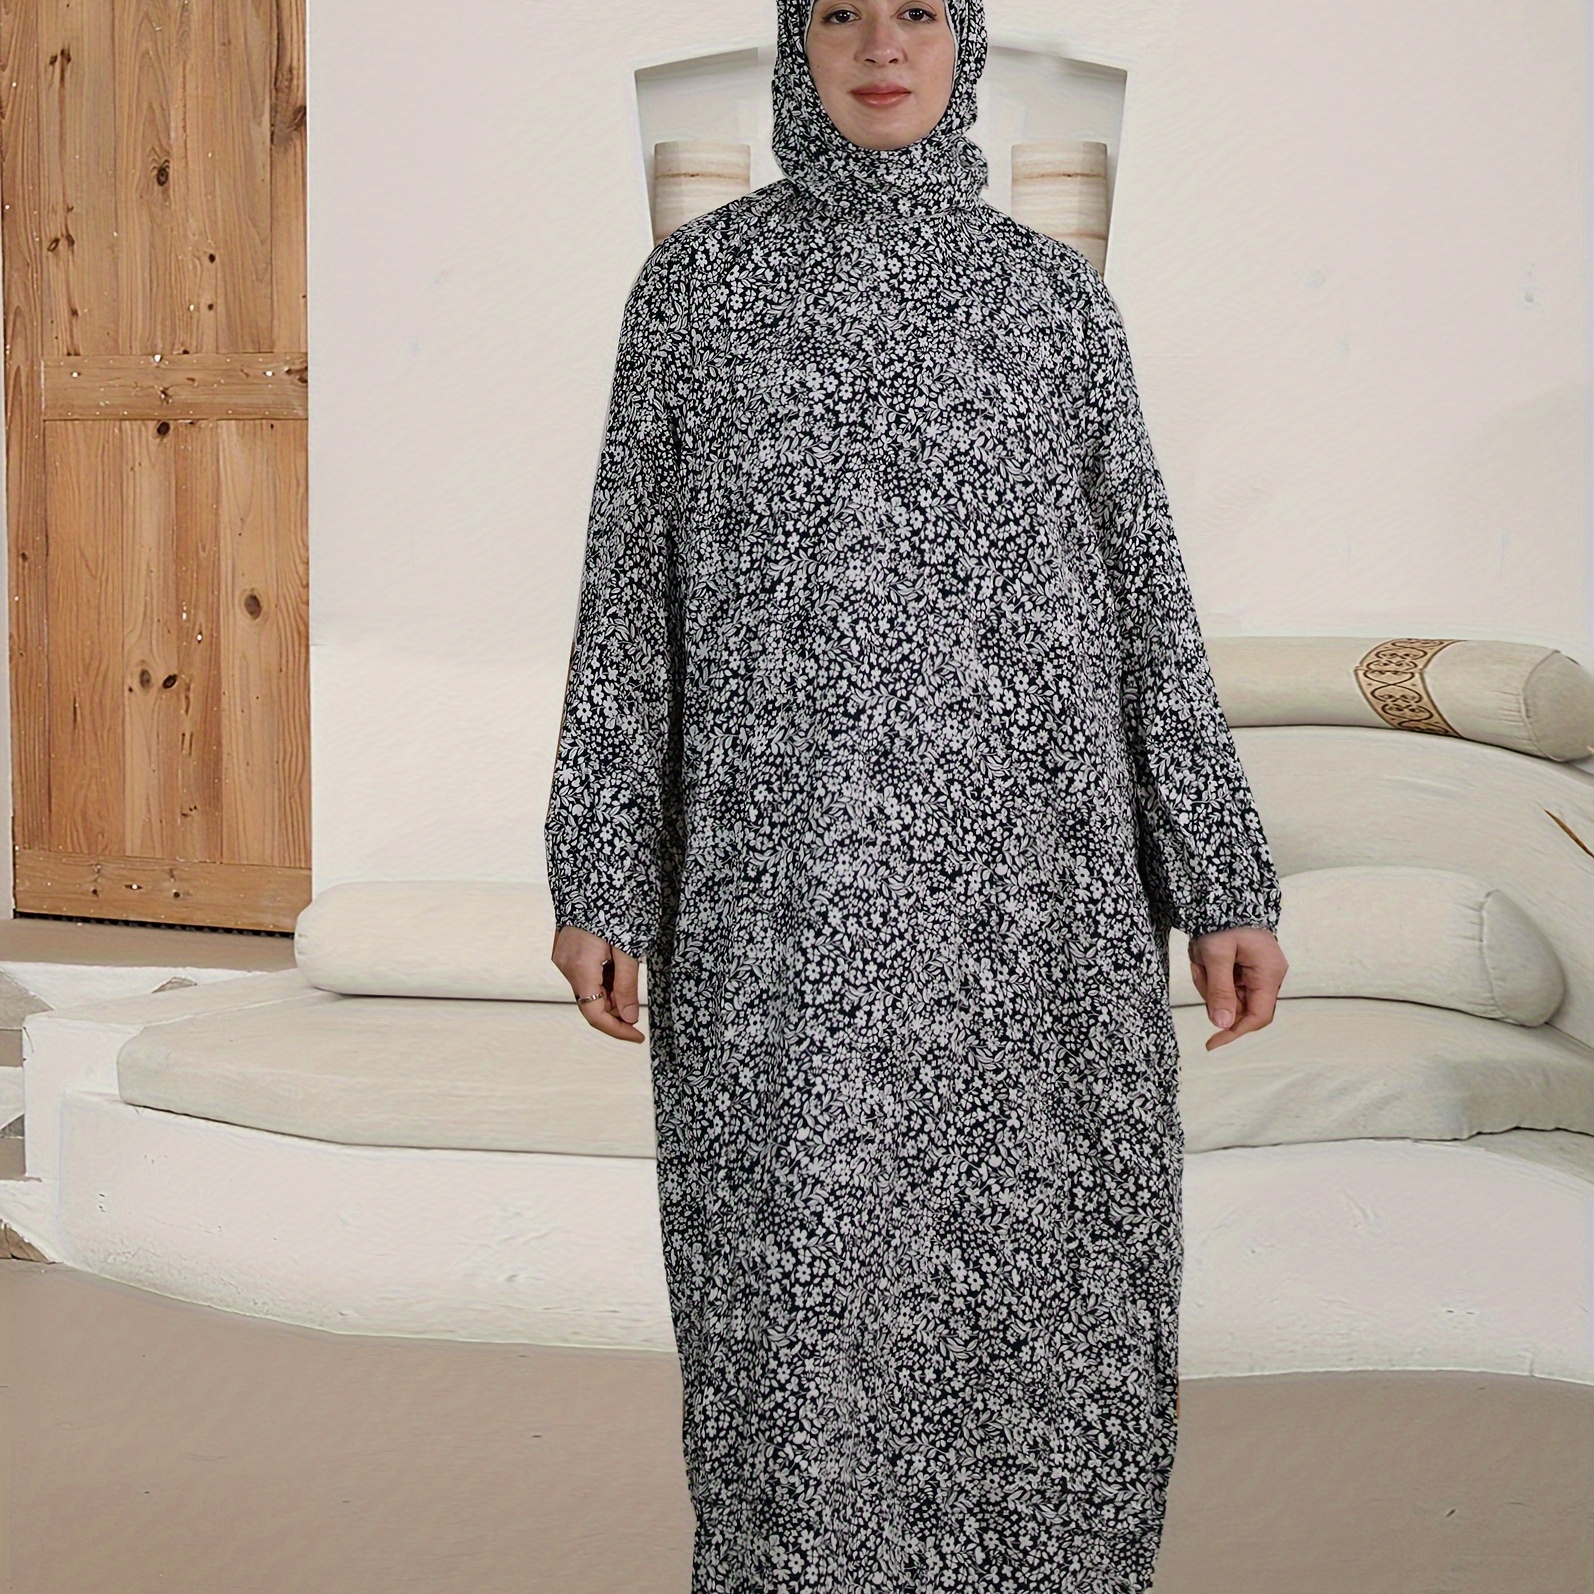 

Ramadan Floral Print Long Sleeve Kaftan Dress, Maxi Length Prayer Robe Scarf Dress, Women's Clothing